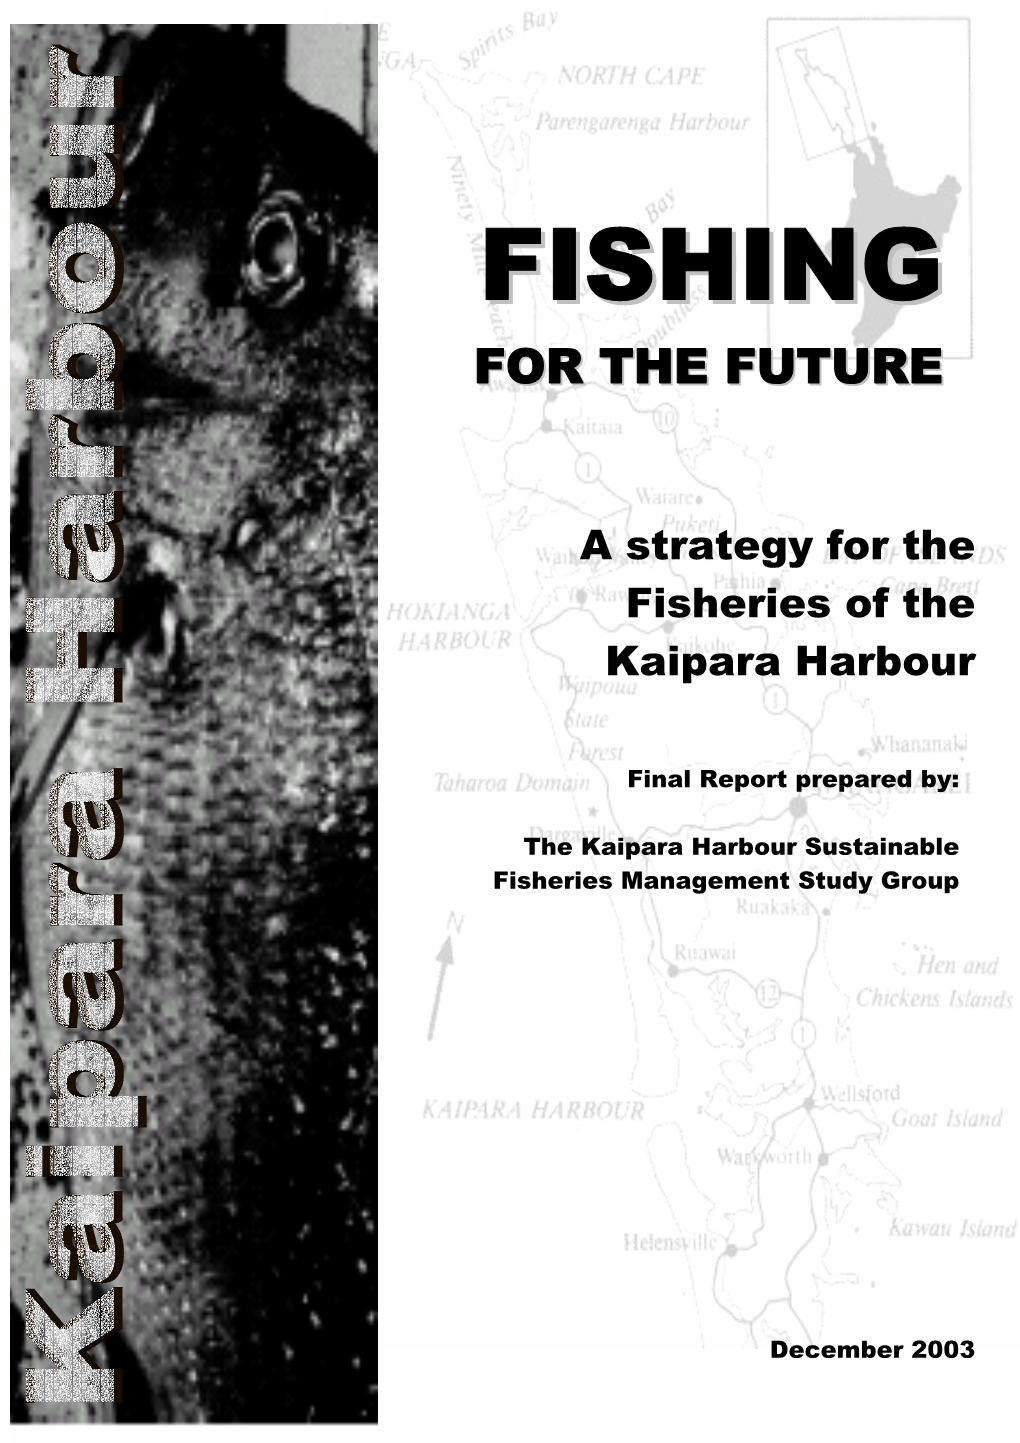 Kaipara Harbour Fishing for the Future